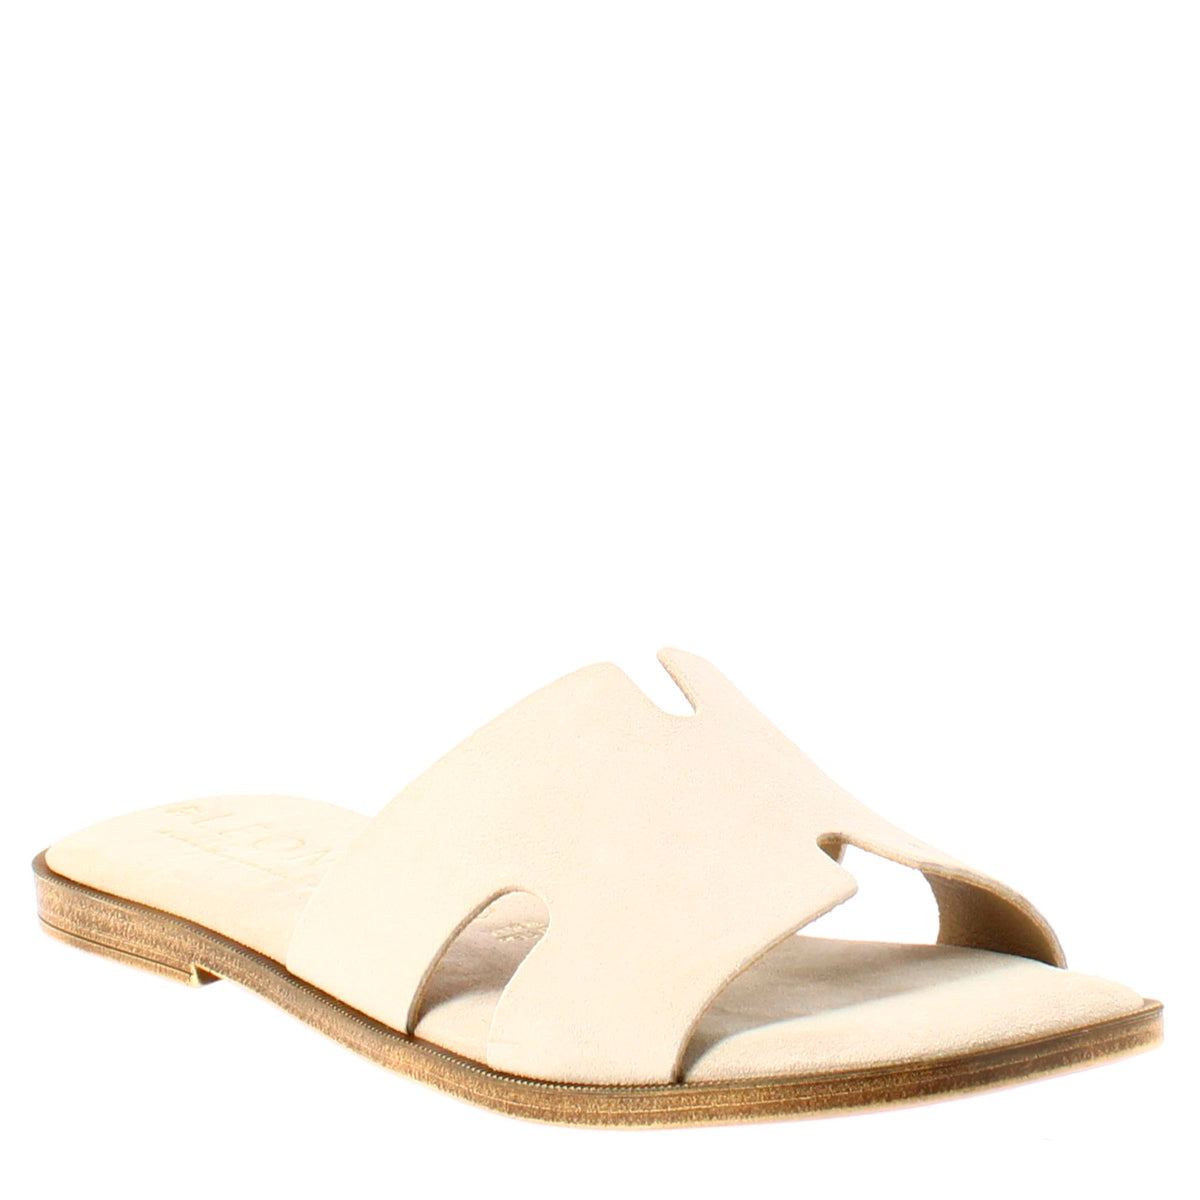 Women's H-shaped sandals in beige suede